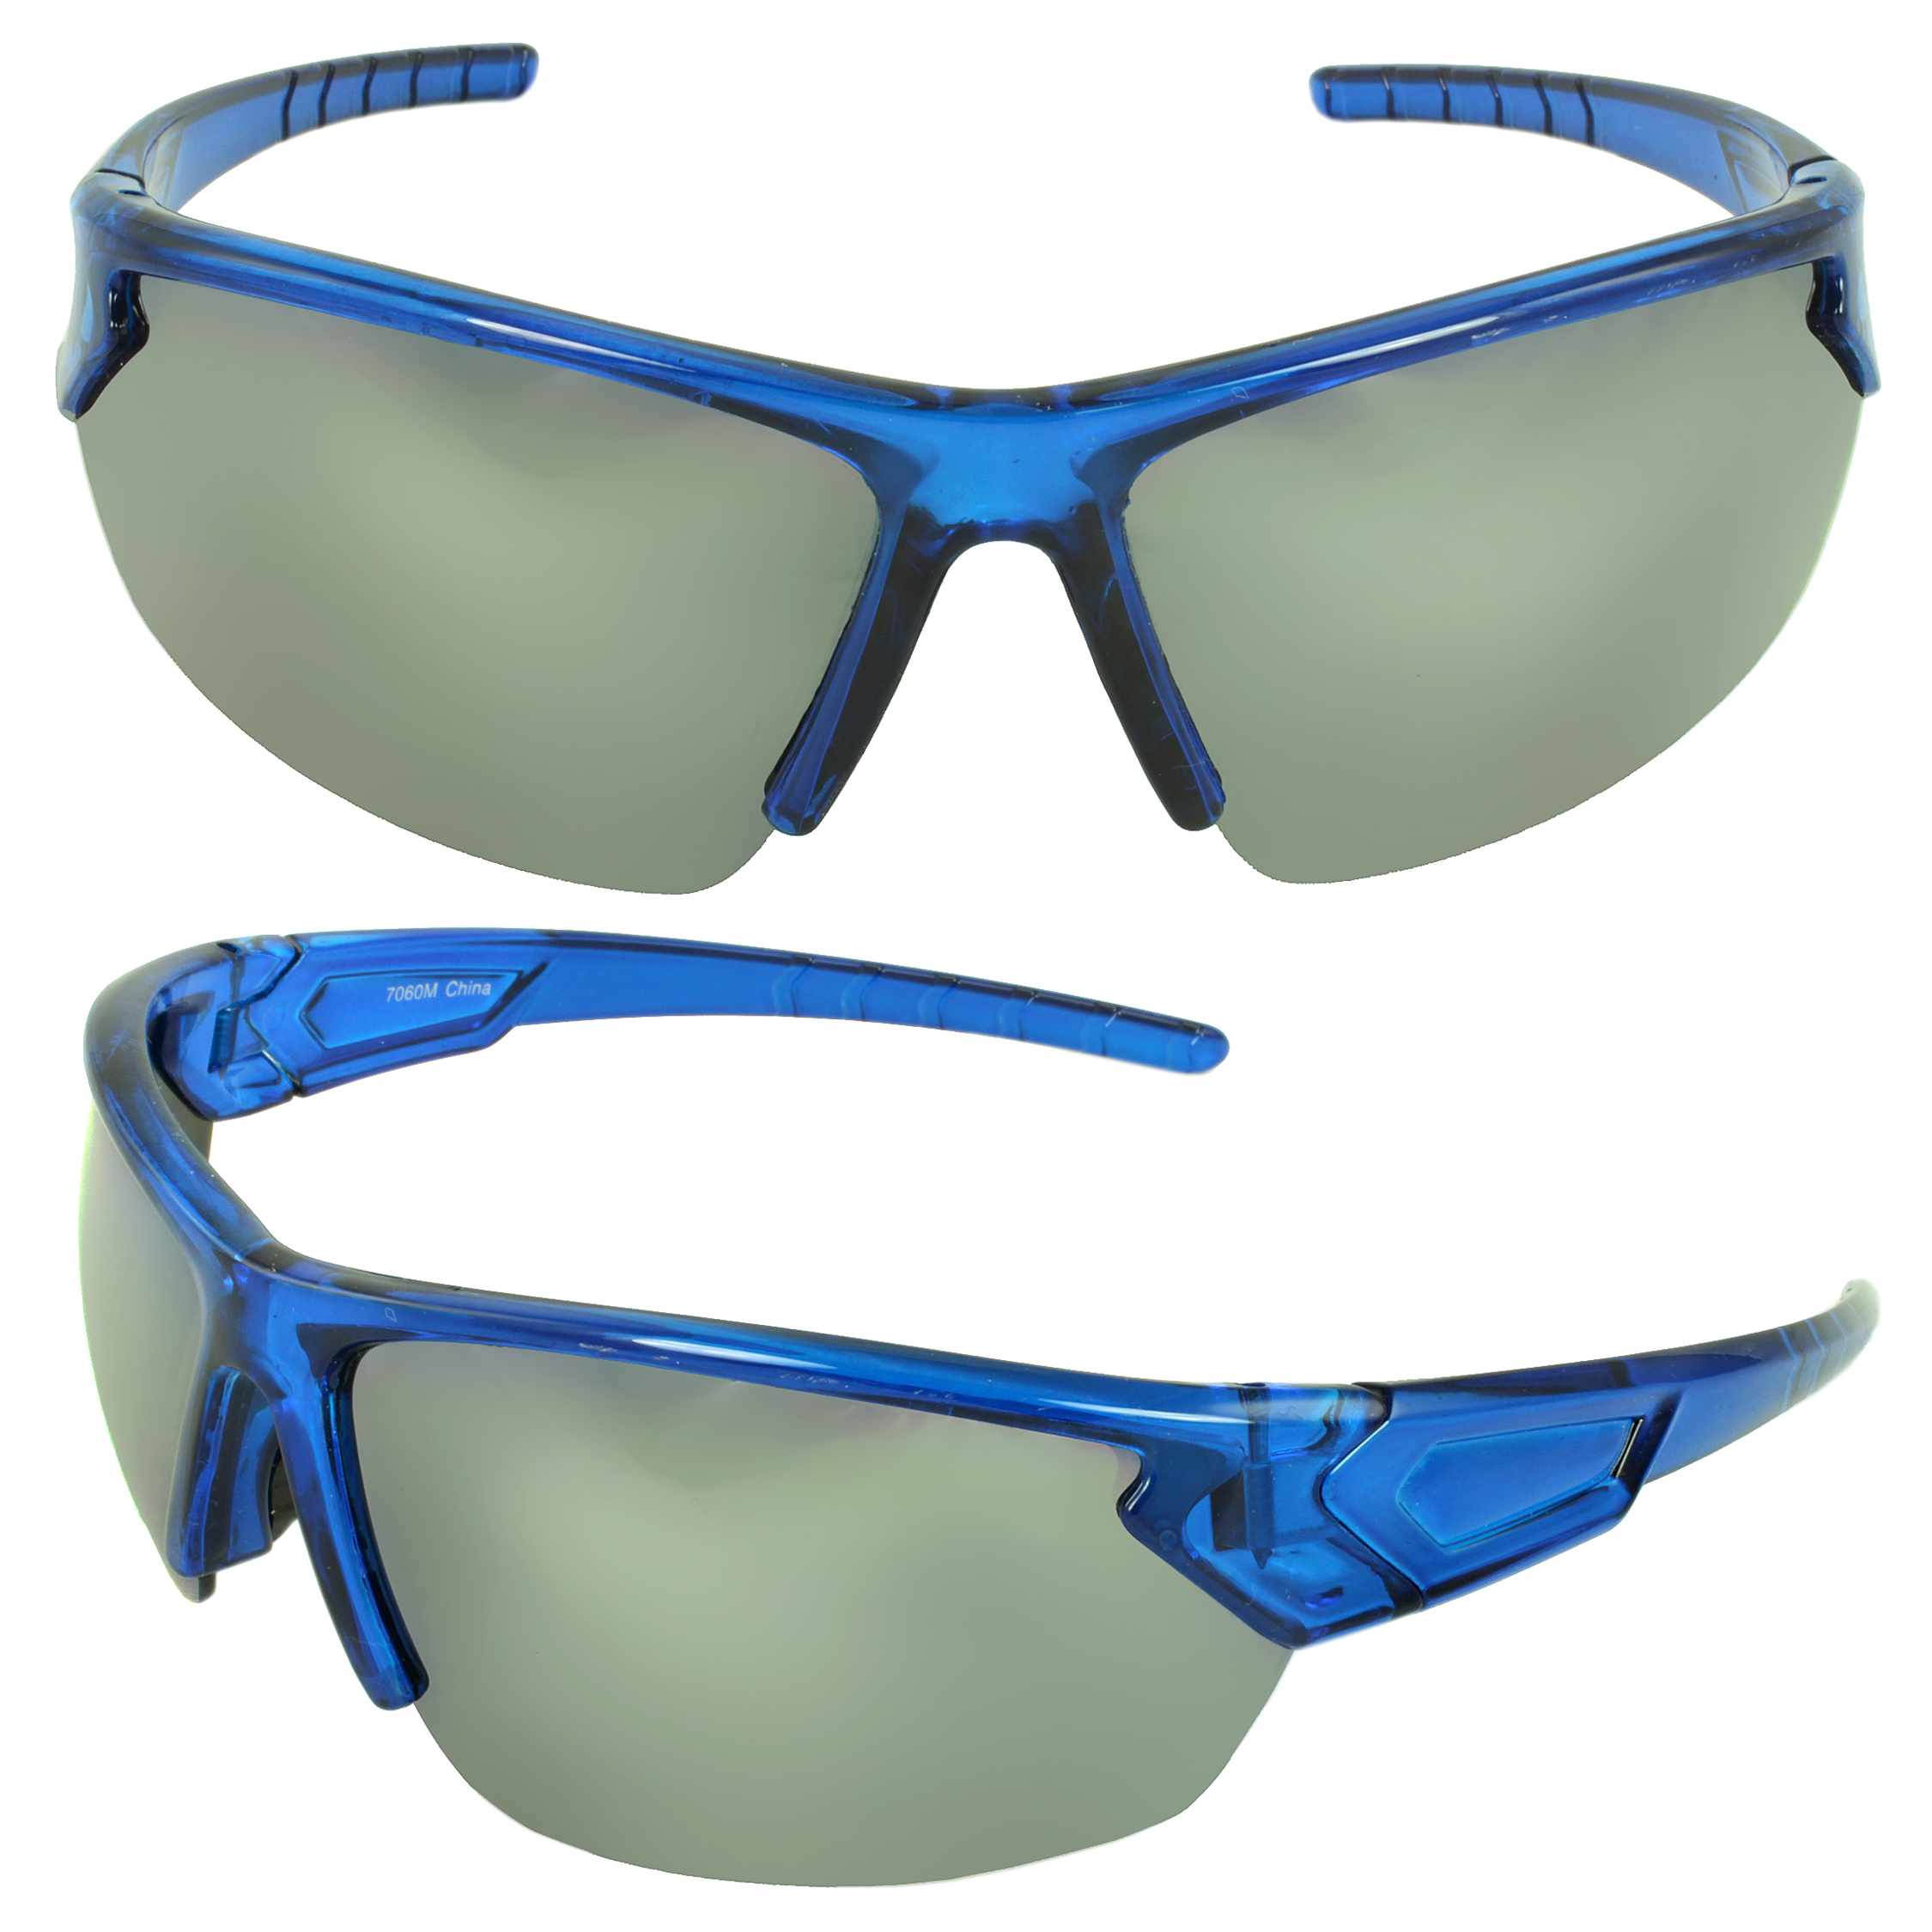 MLC Eyewear TU7060M-BUMR Wrap Fashion Sunglasses Blue Frame Mirror Lenses with Comfortable Rubber Cushion Pad - image 1 of 2